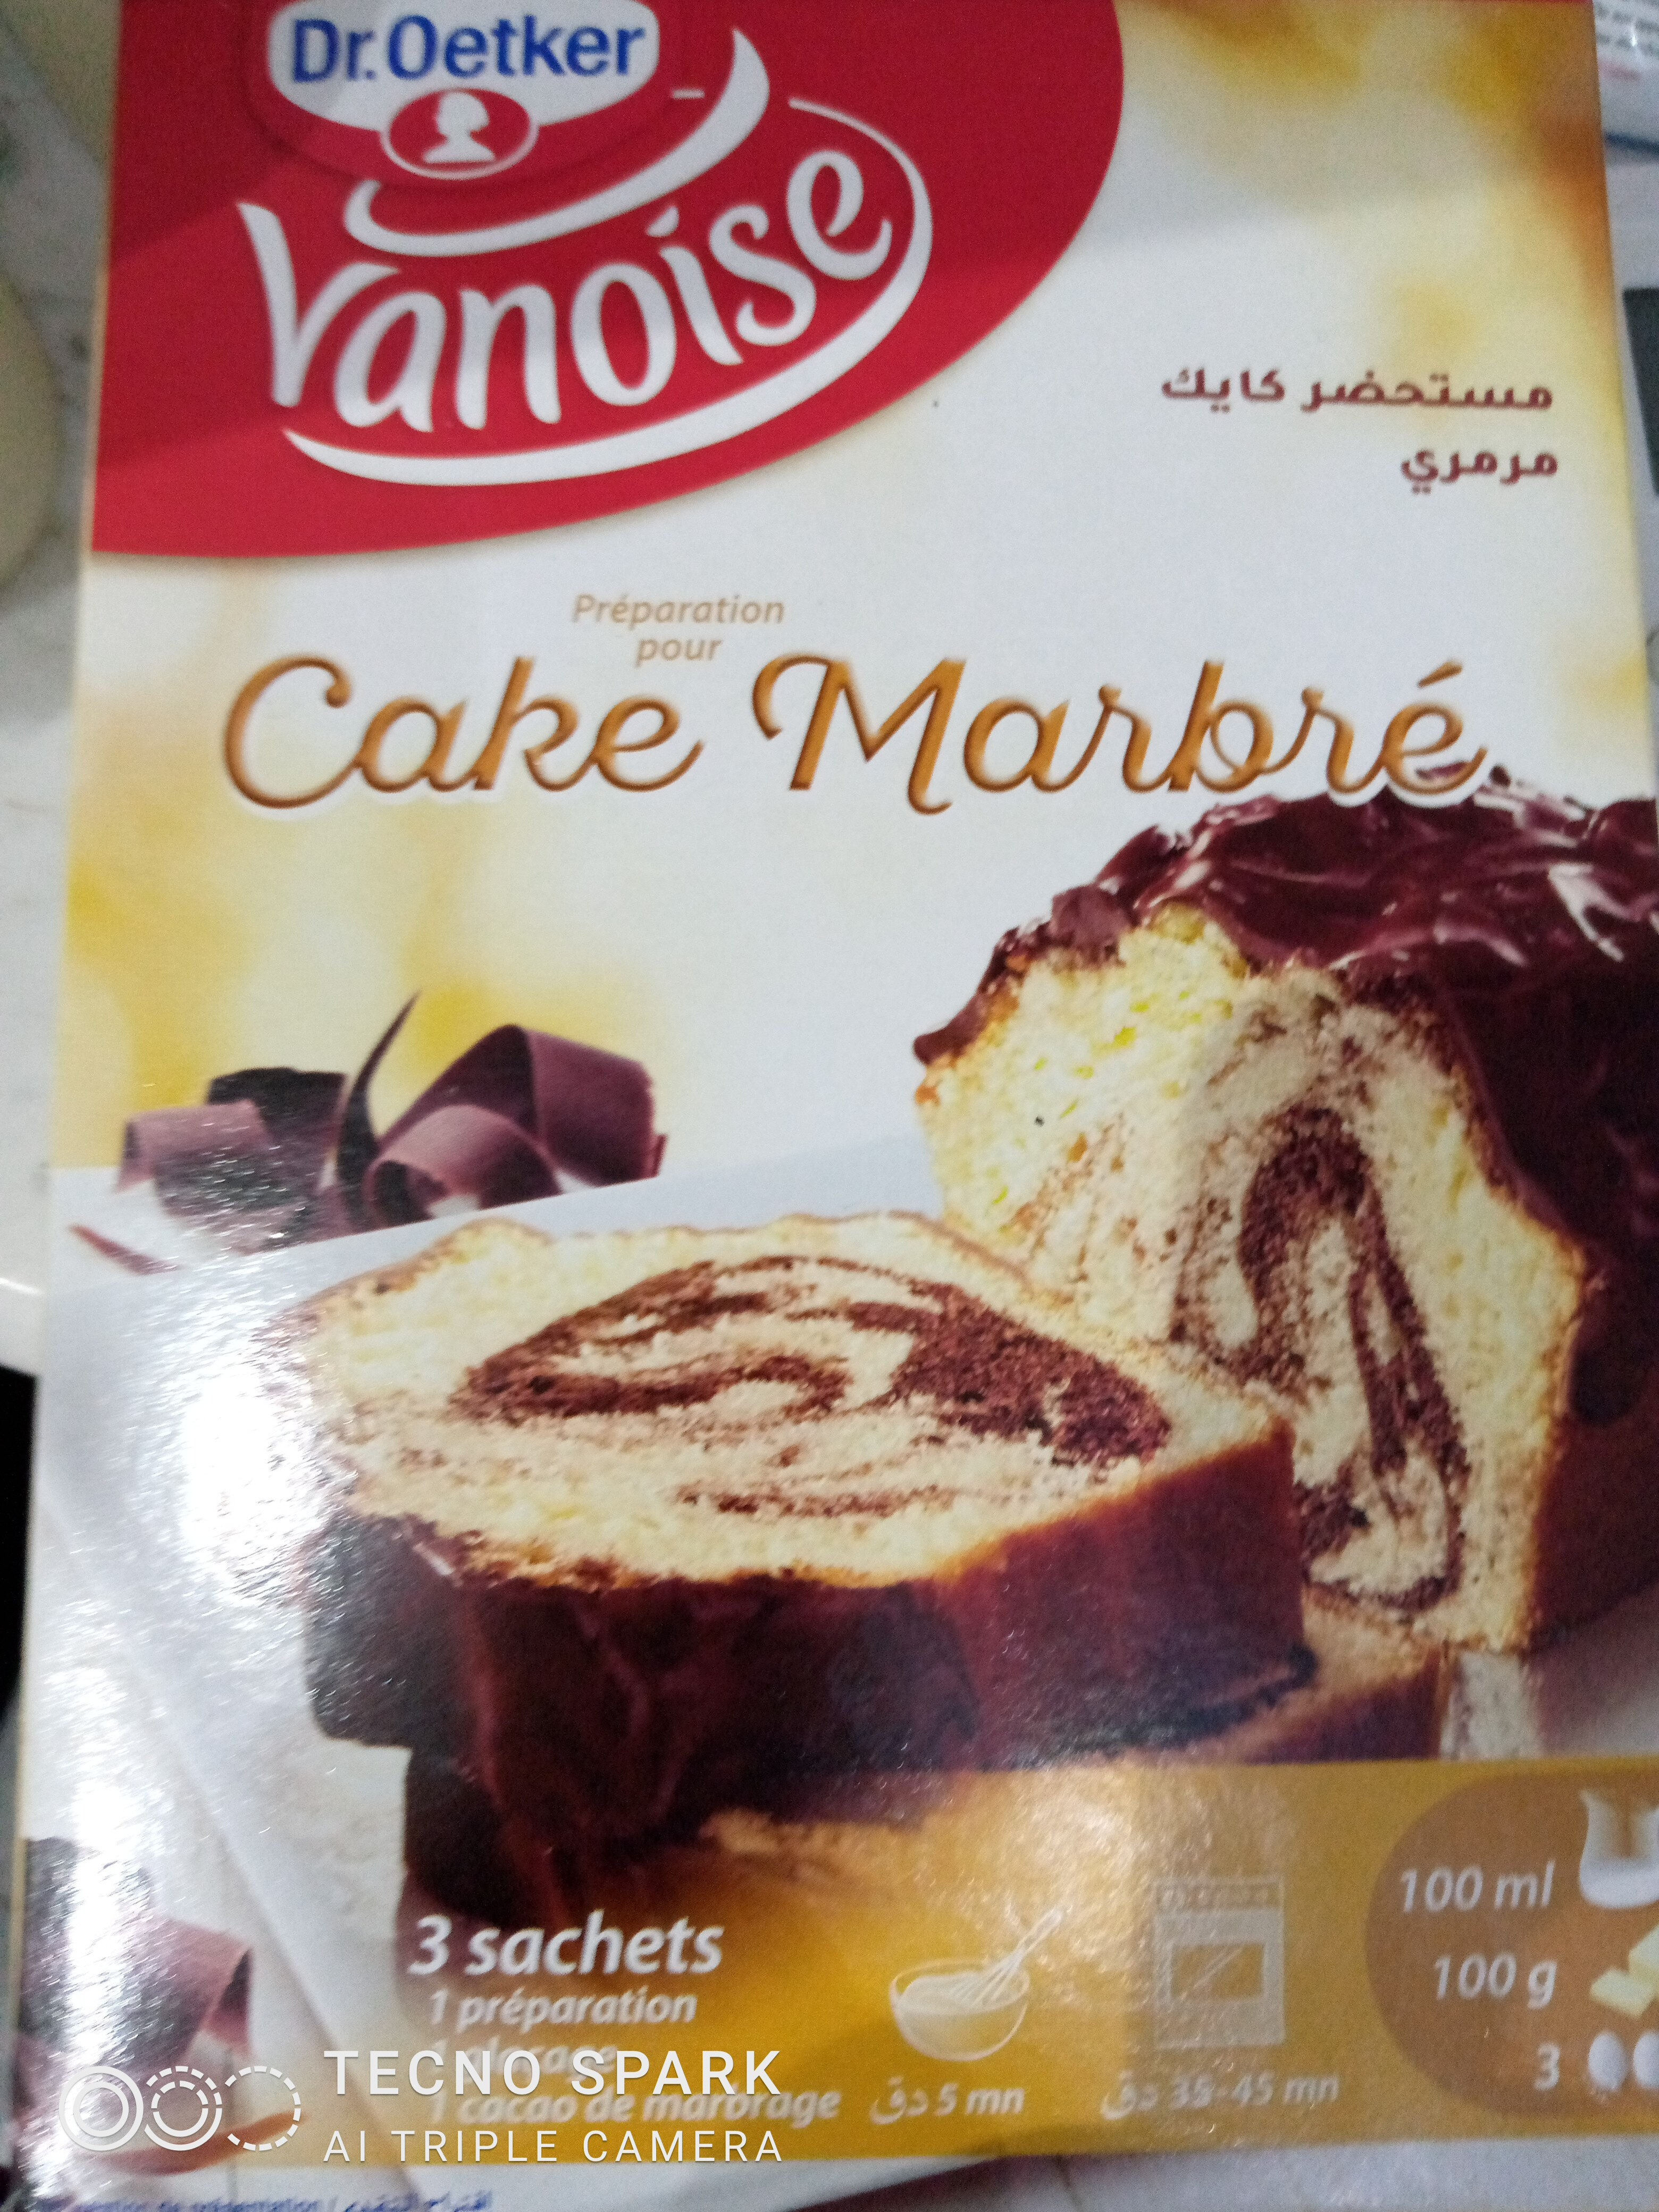 cake marbré - Product - fr